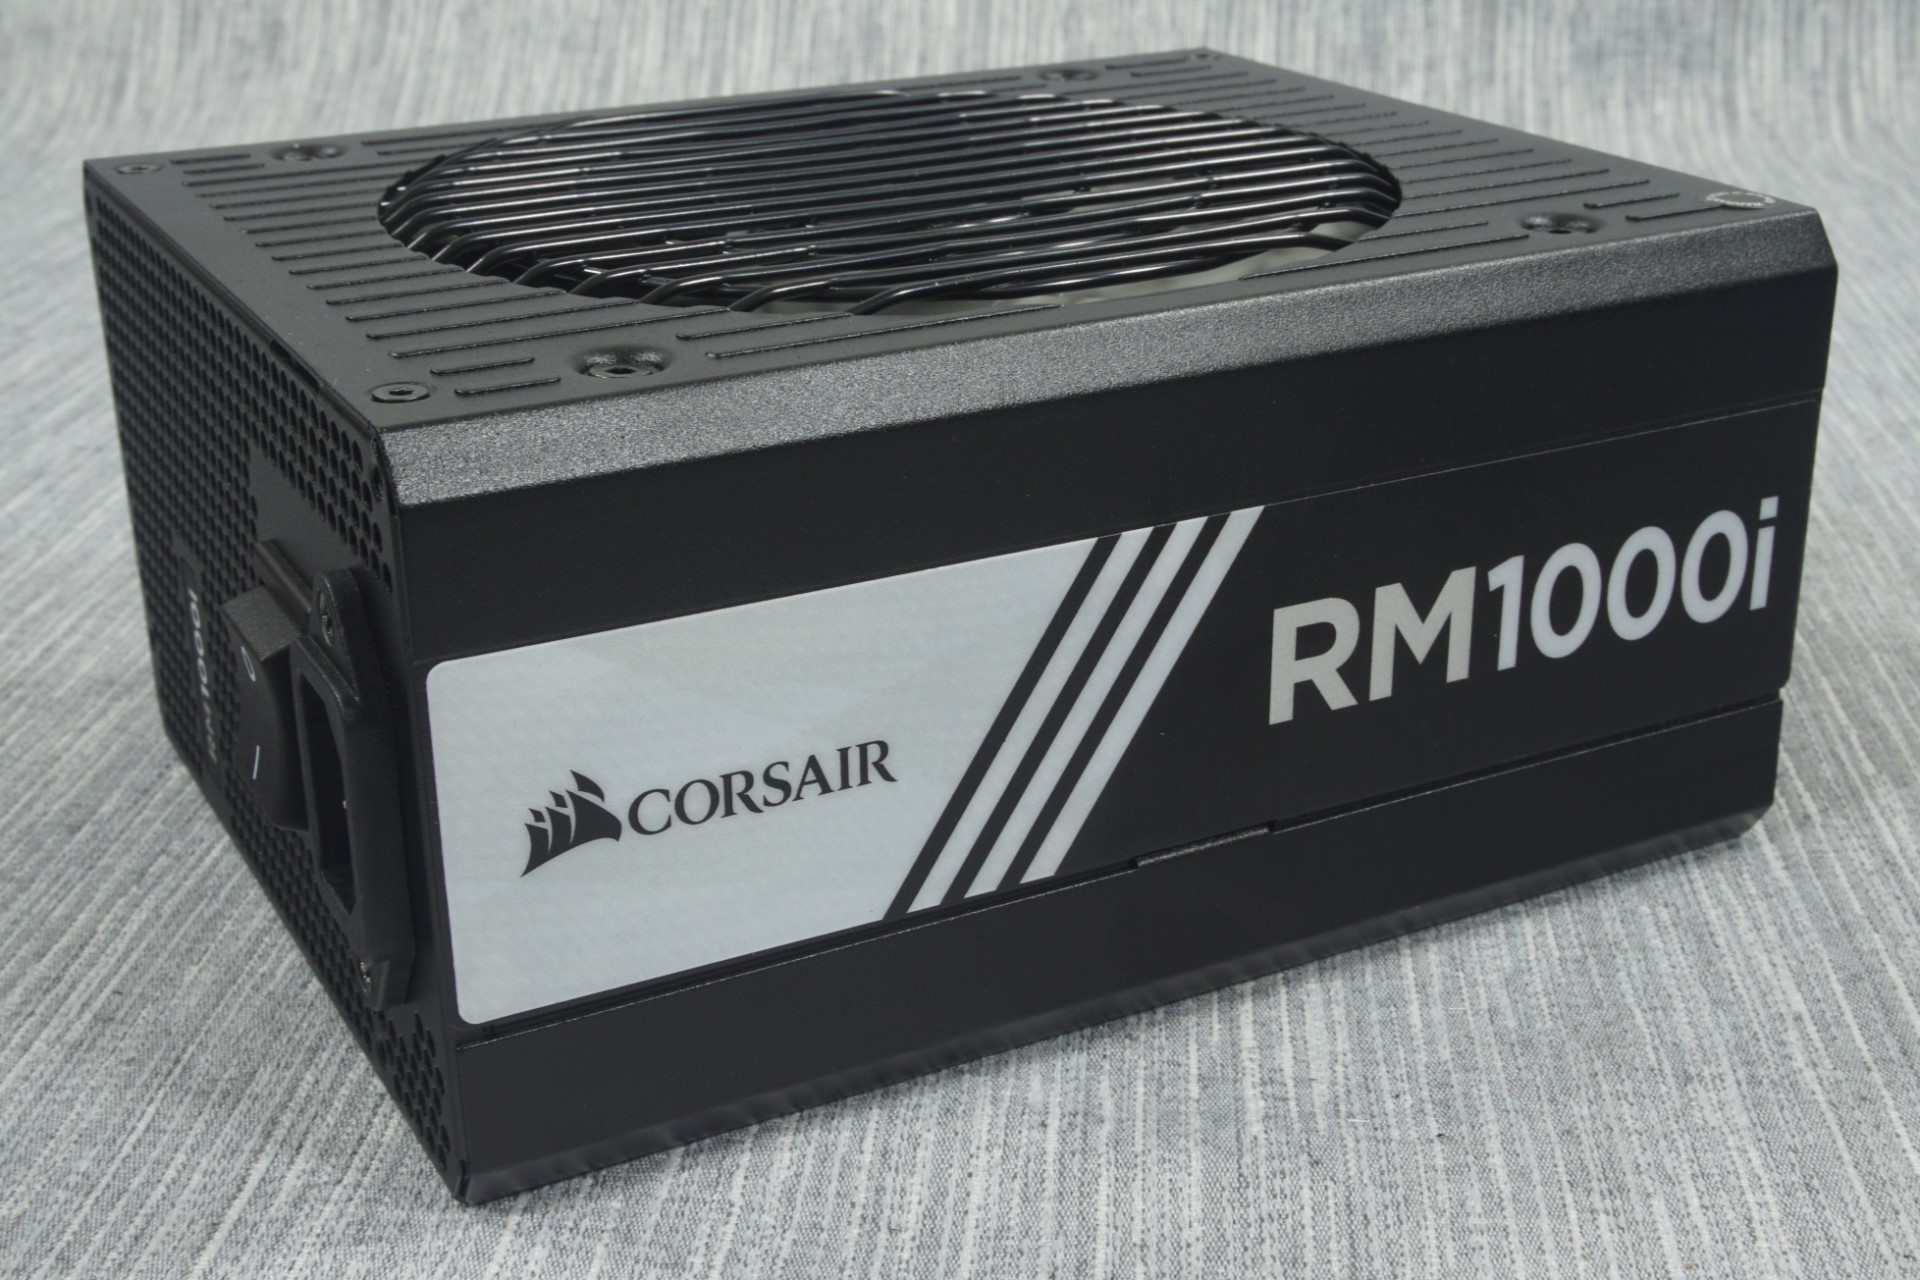 Corsair RM1000x 1000W 80 PLUS Gold Power Supply Review